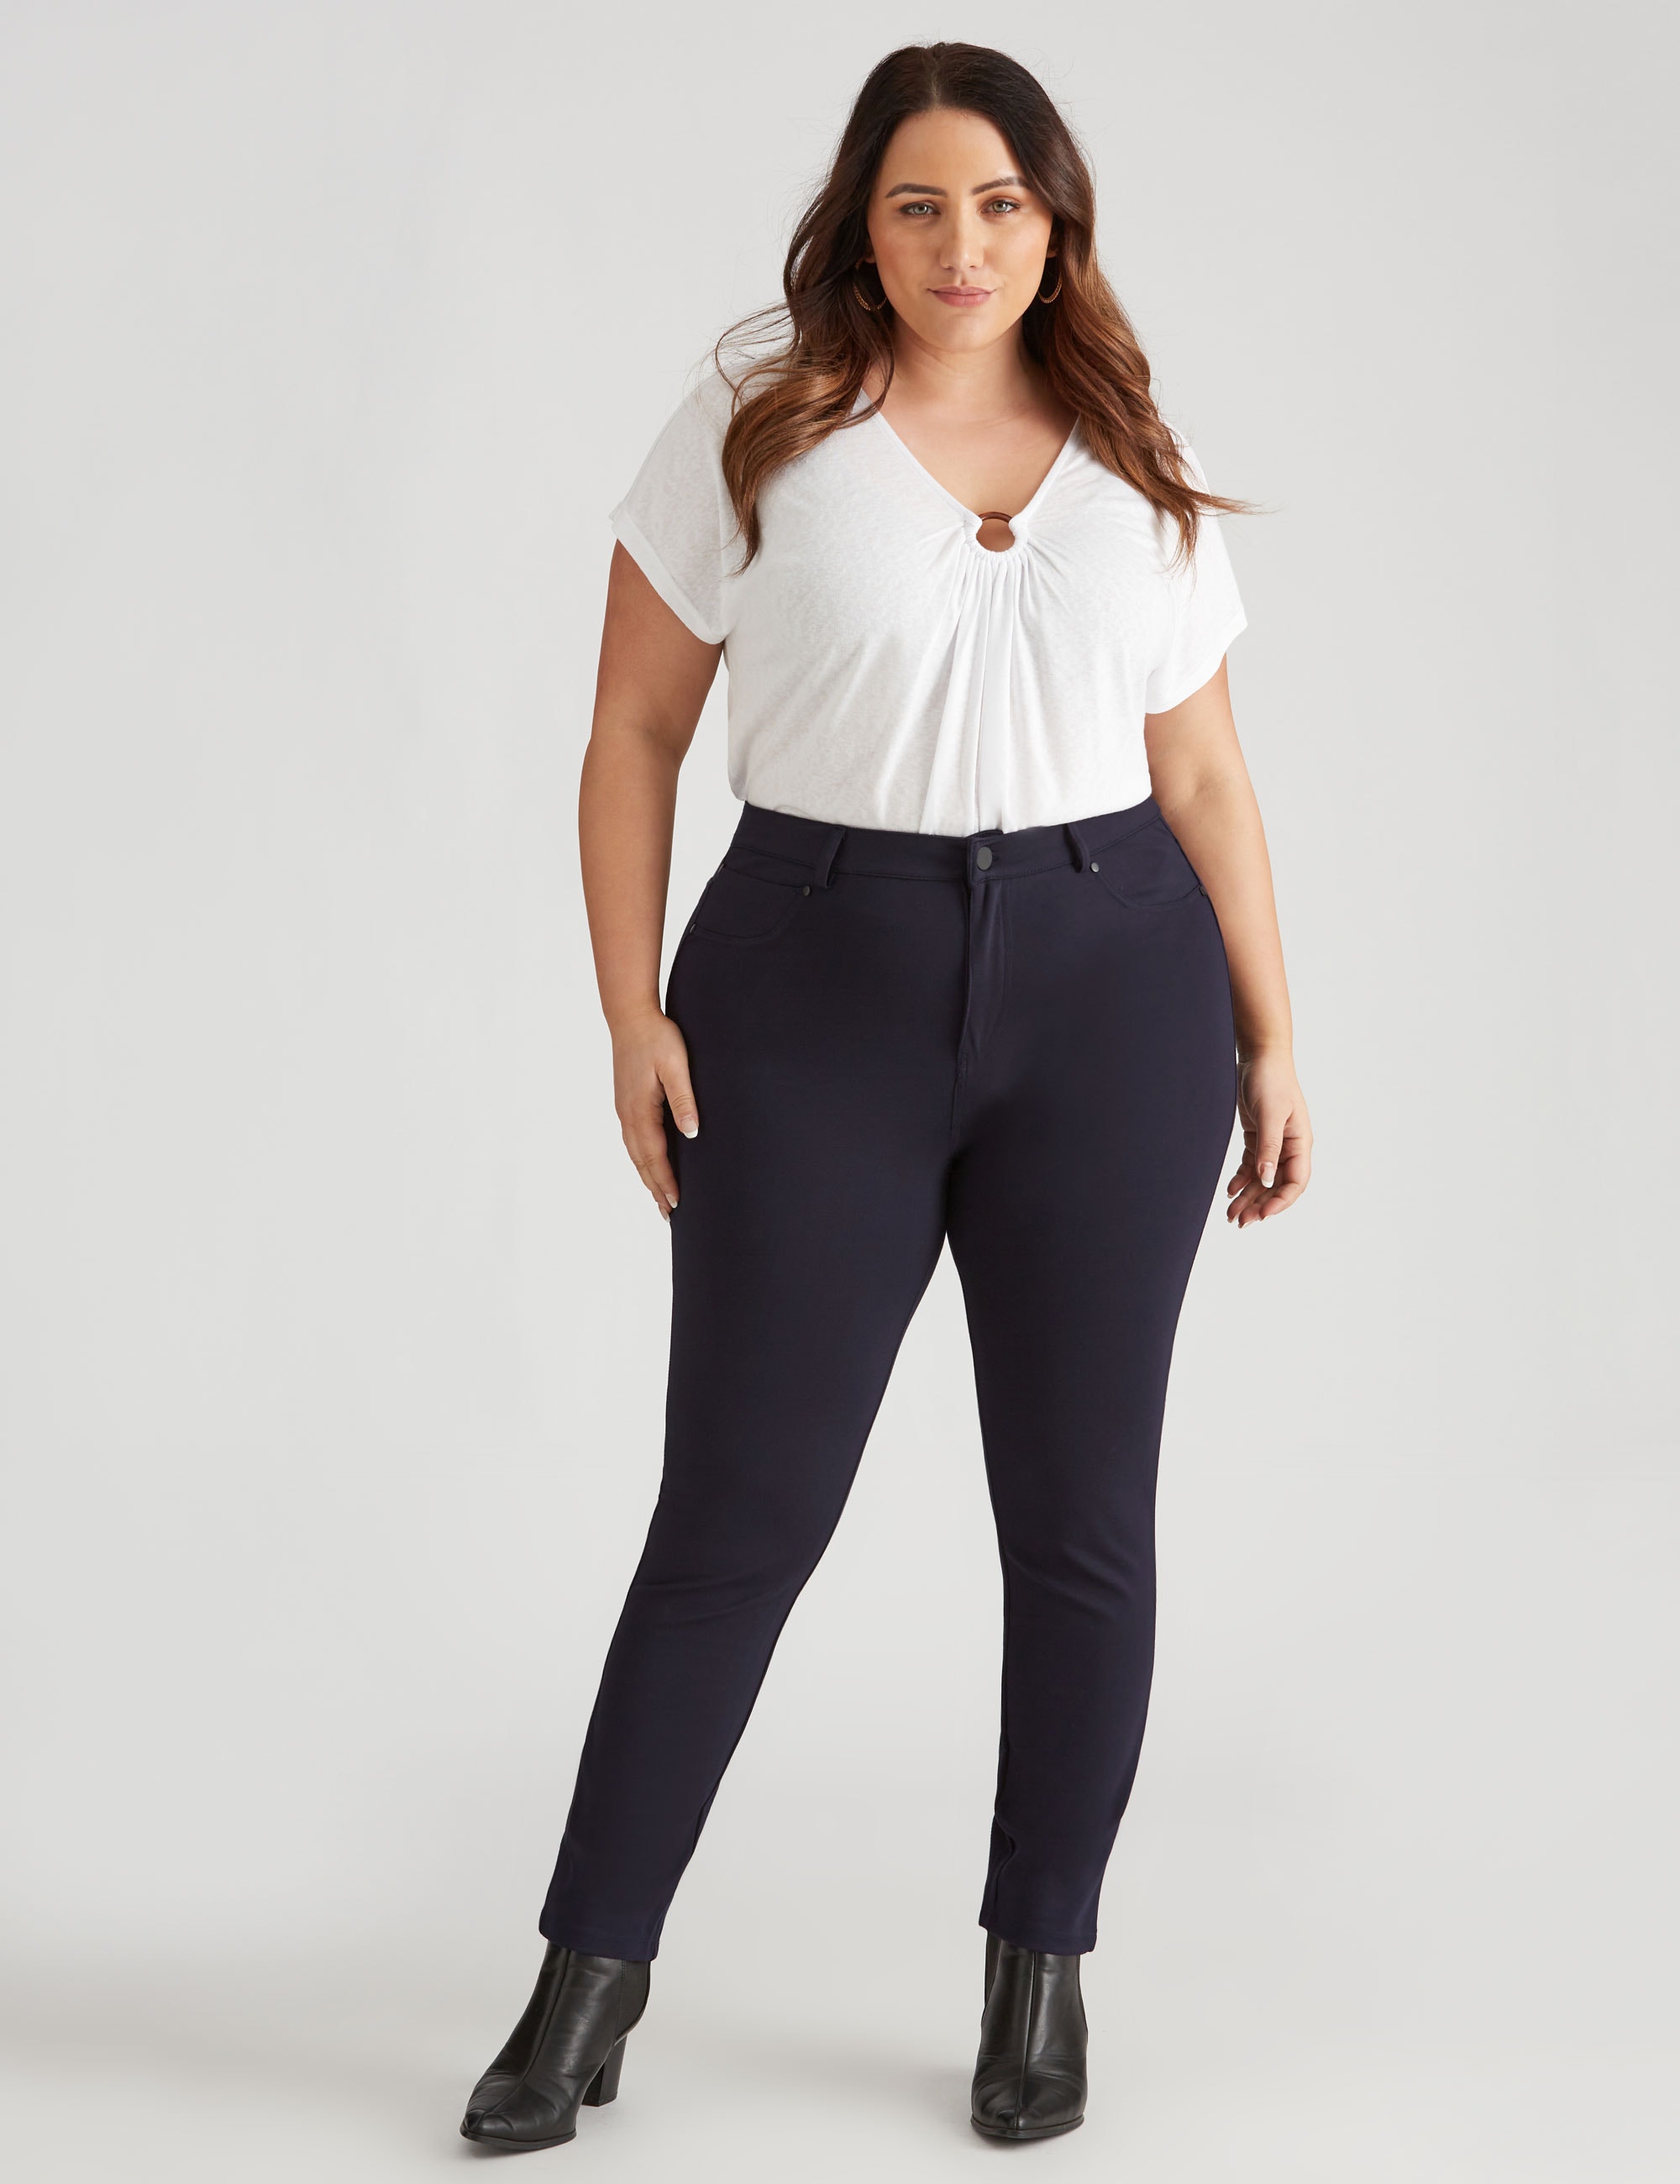 BeMe - Plus Size - Womens Pants - Regular Length Skinny Fly Front